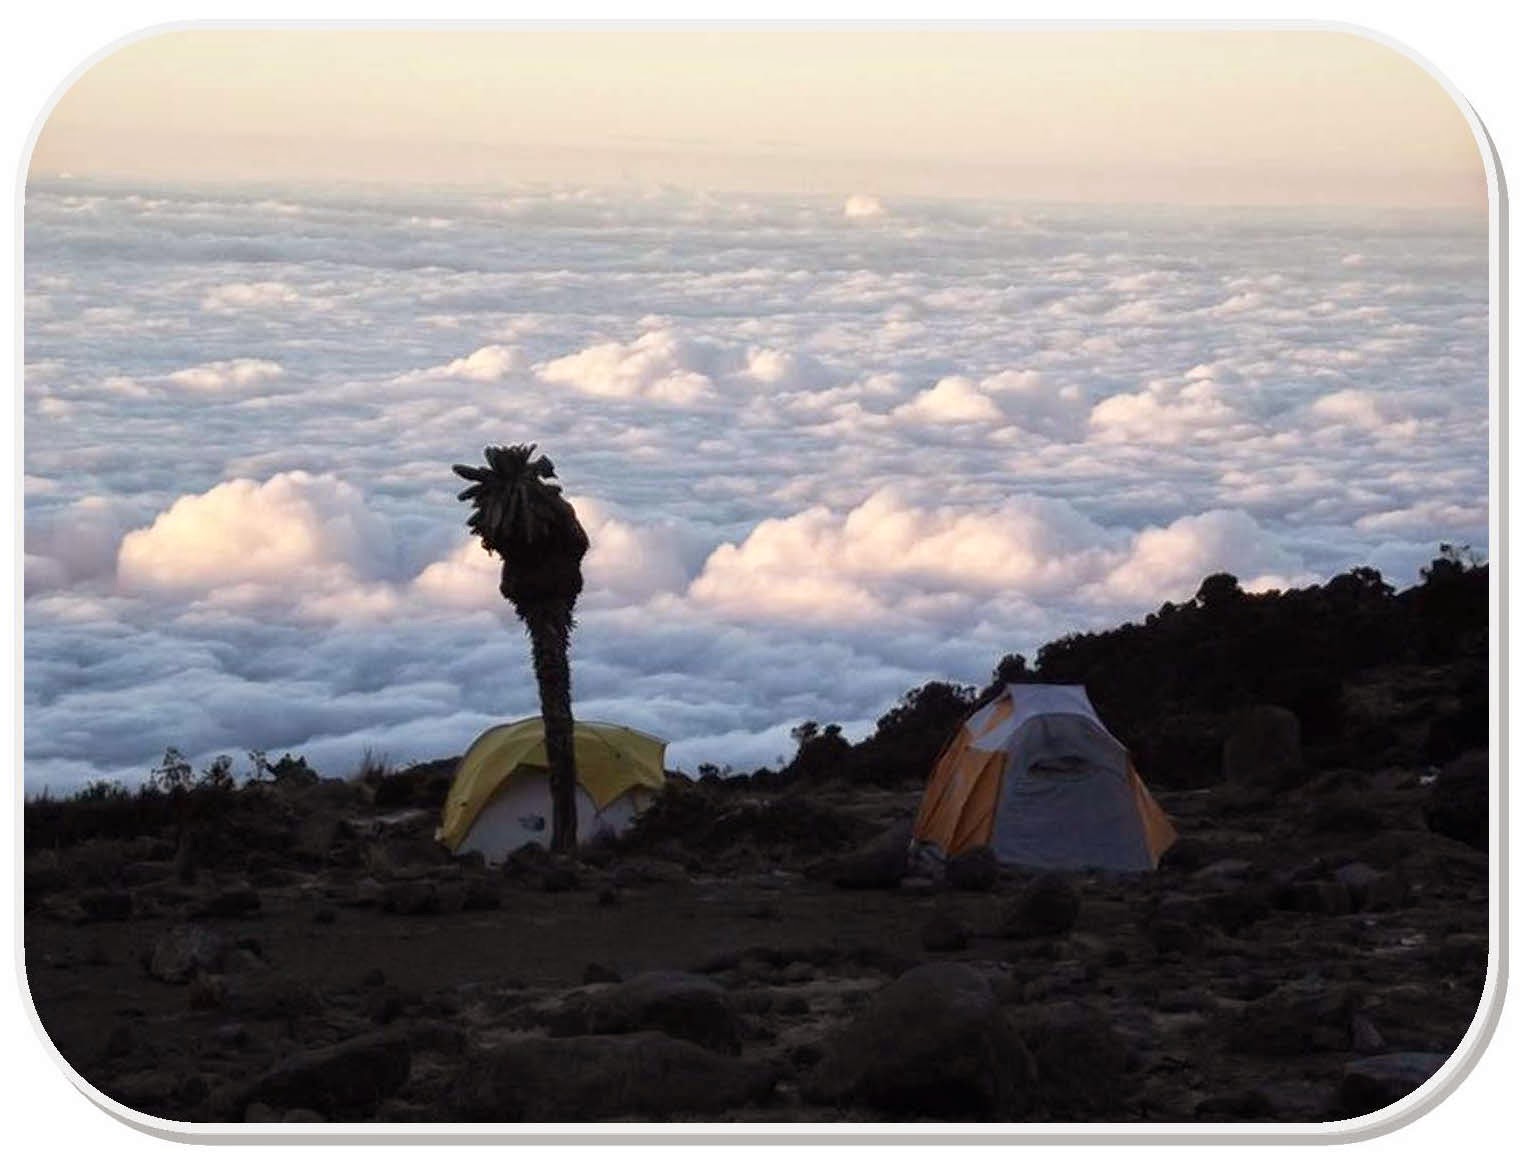 Camping in Kilimanjaro